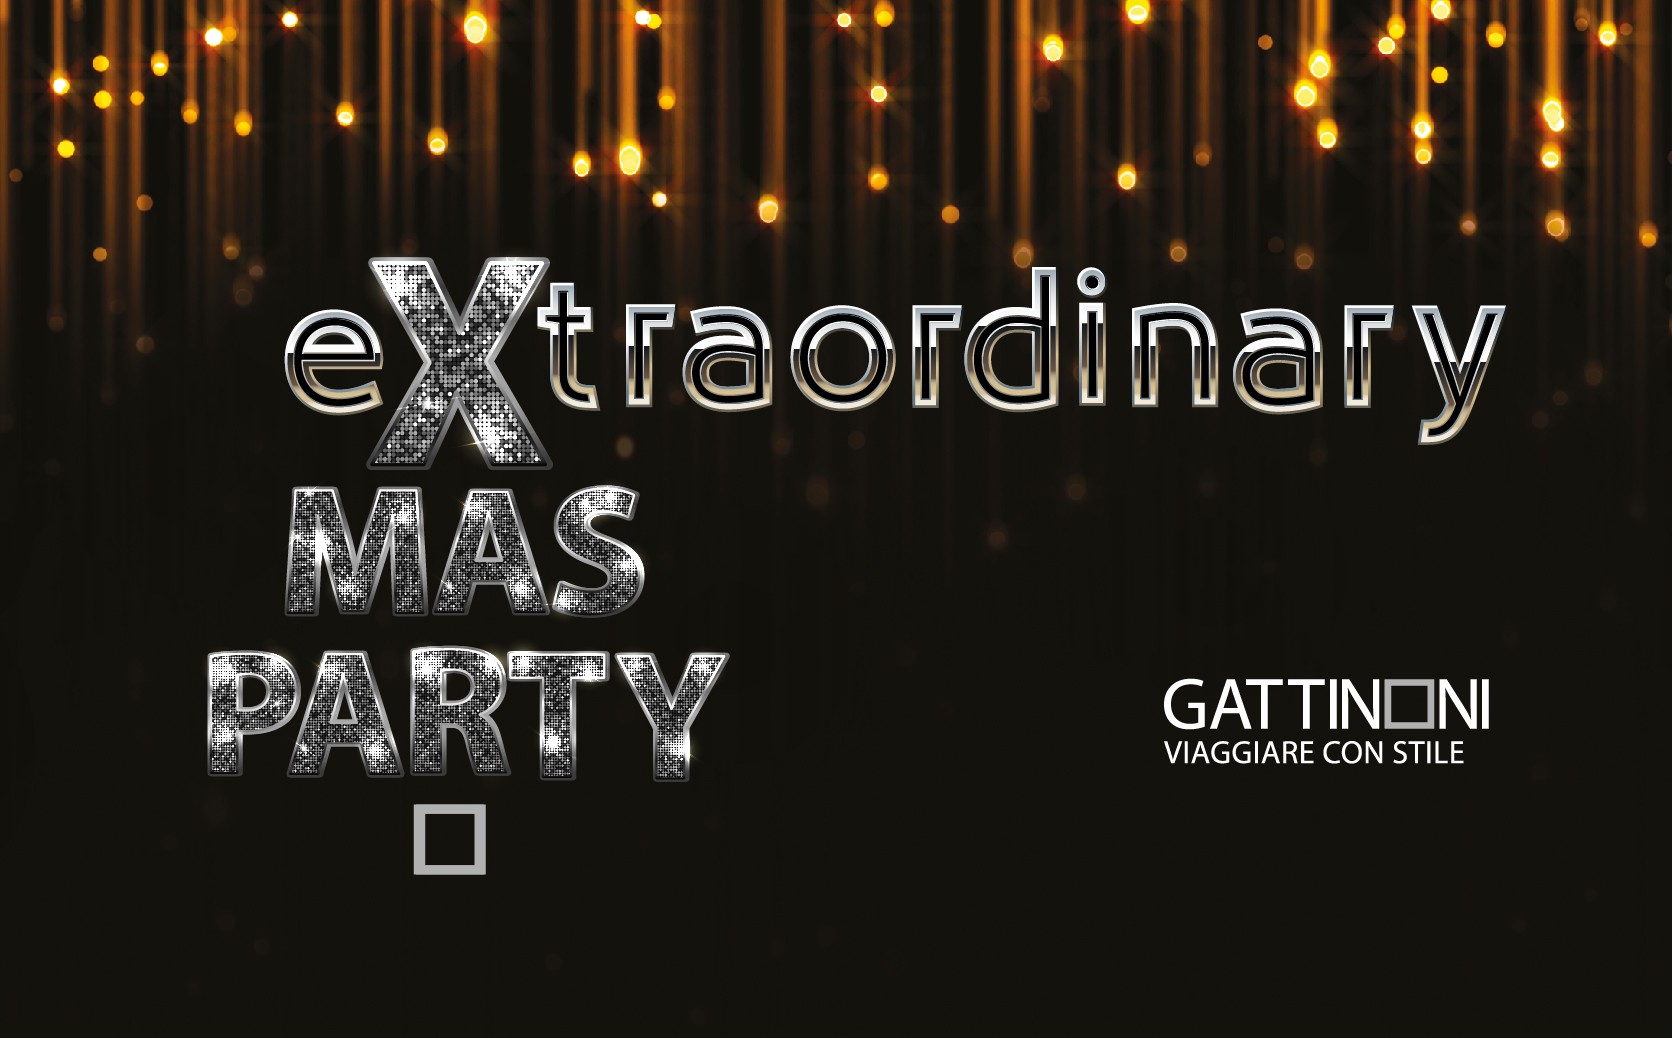 Christmas Party # Milano 12.2019 Gattinoni Travel Network